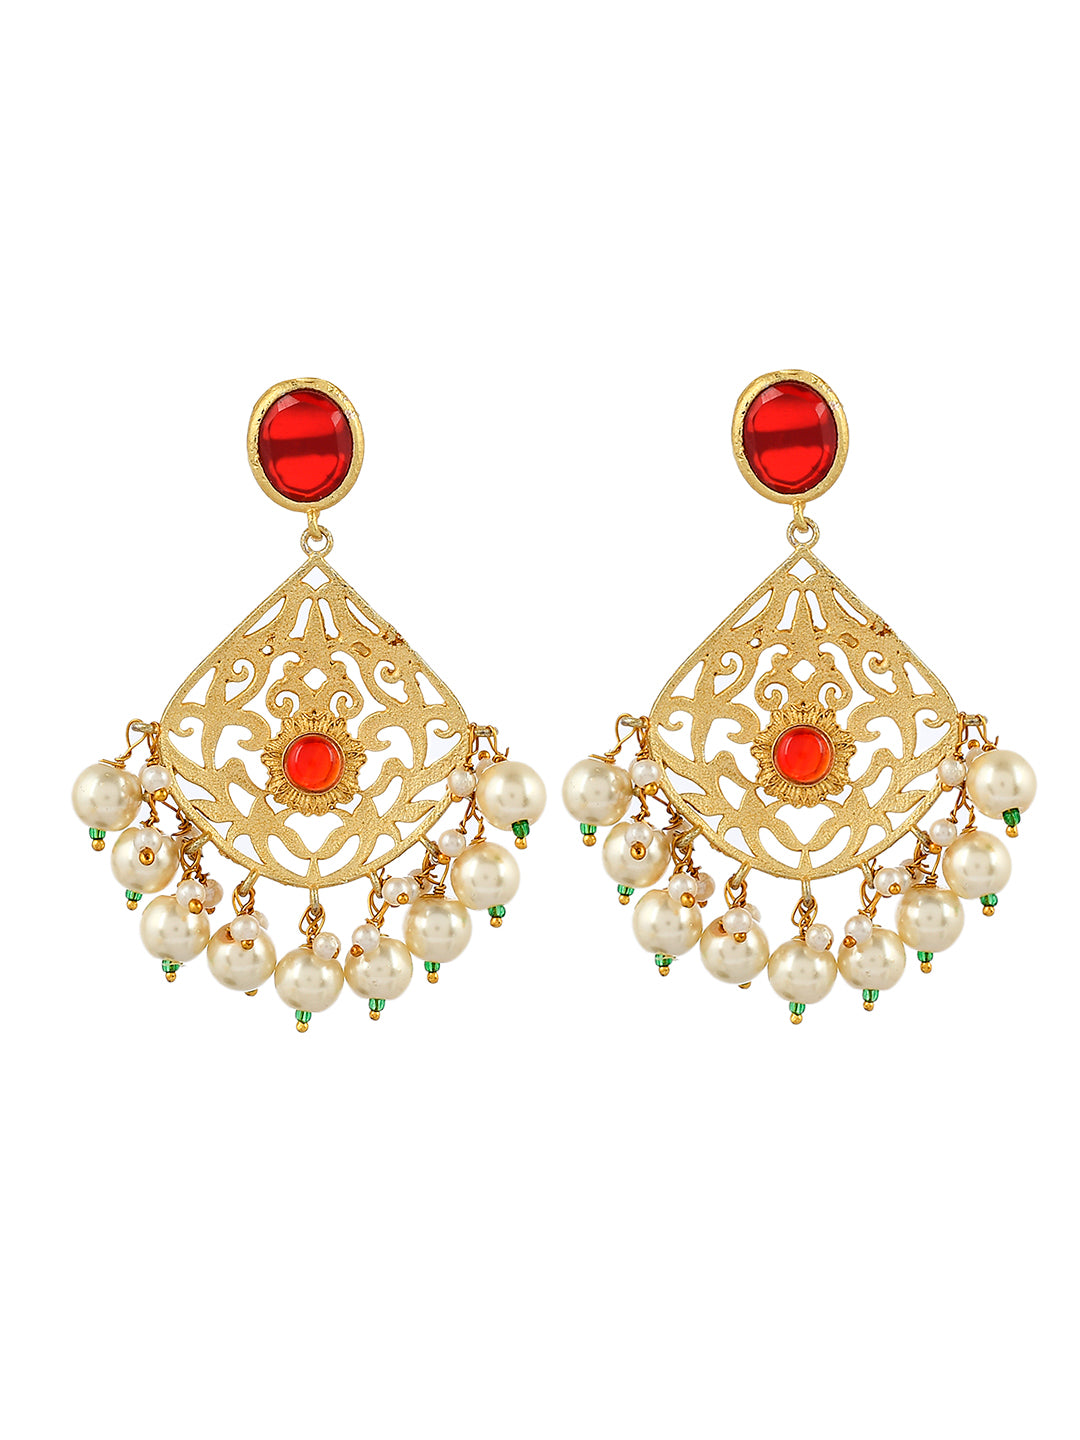 Buy Red Pale Blue Drop Dangler Earrings for Women Online at Ajnaa Jewels |  450251